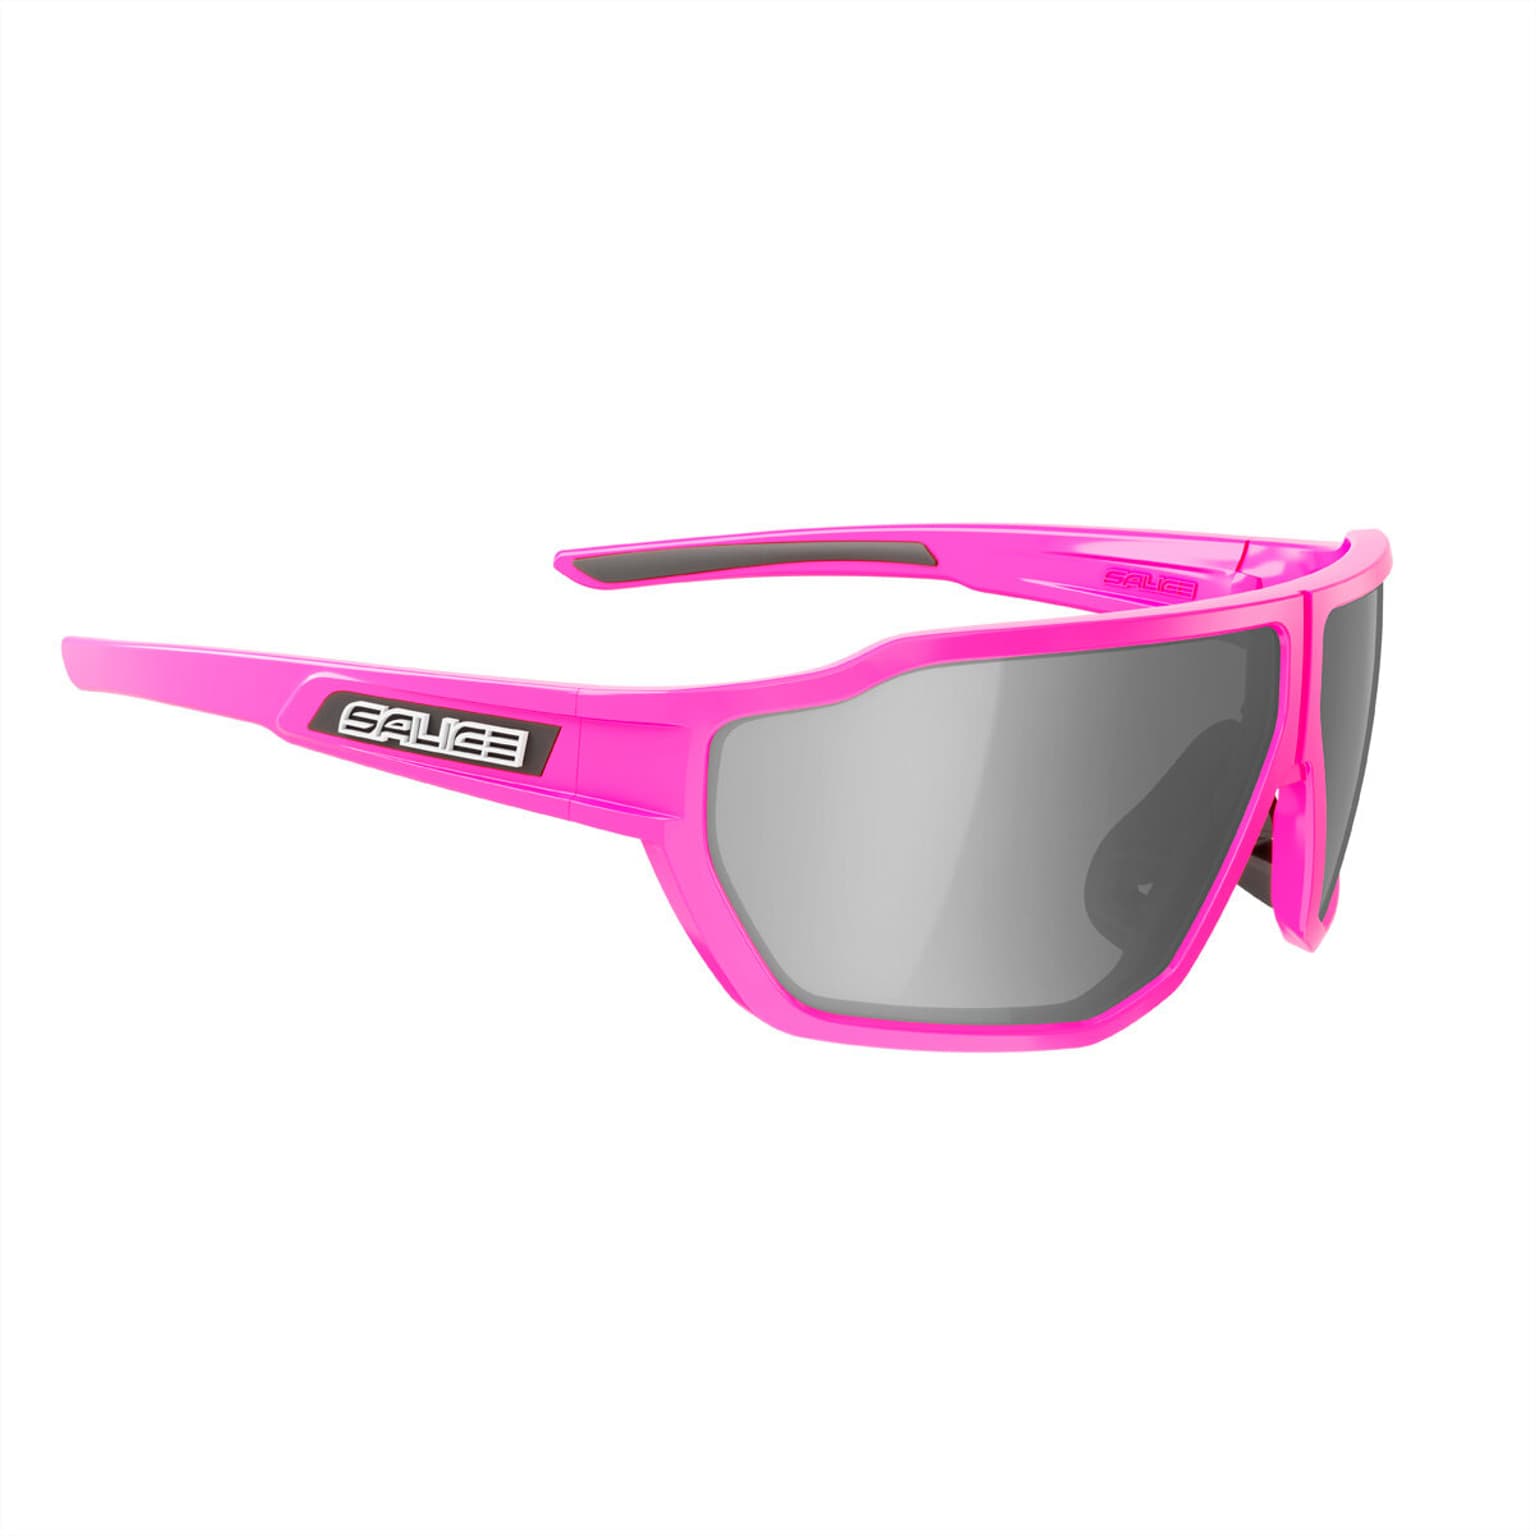 Salice Salice 024Q Sportbrille pink 1